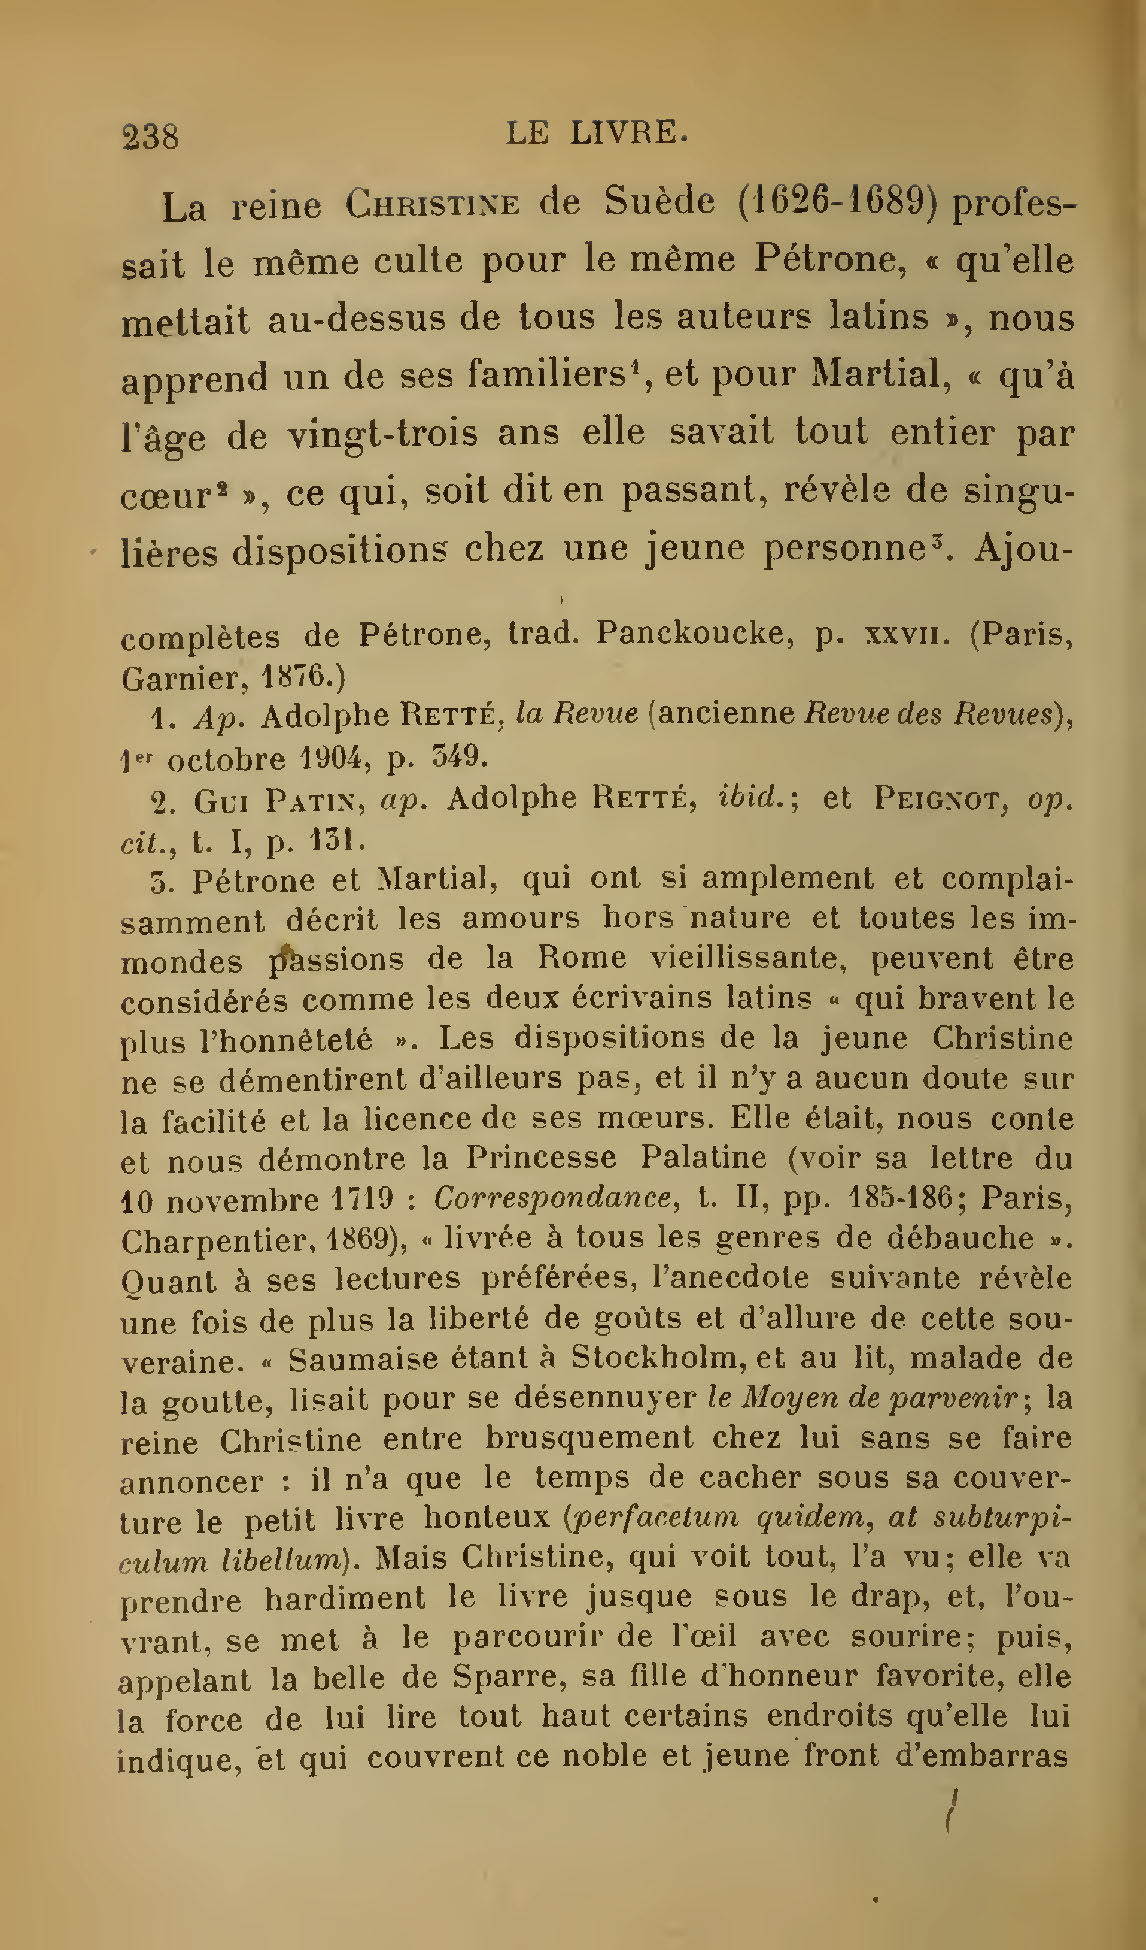 Albert Cim, Le Livre, t. I, p. 238.